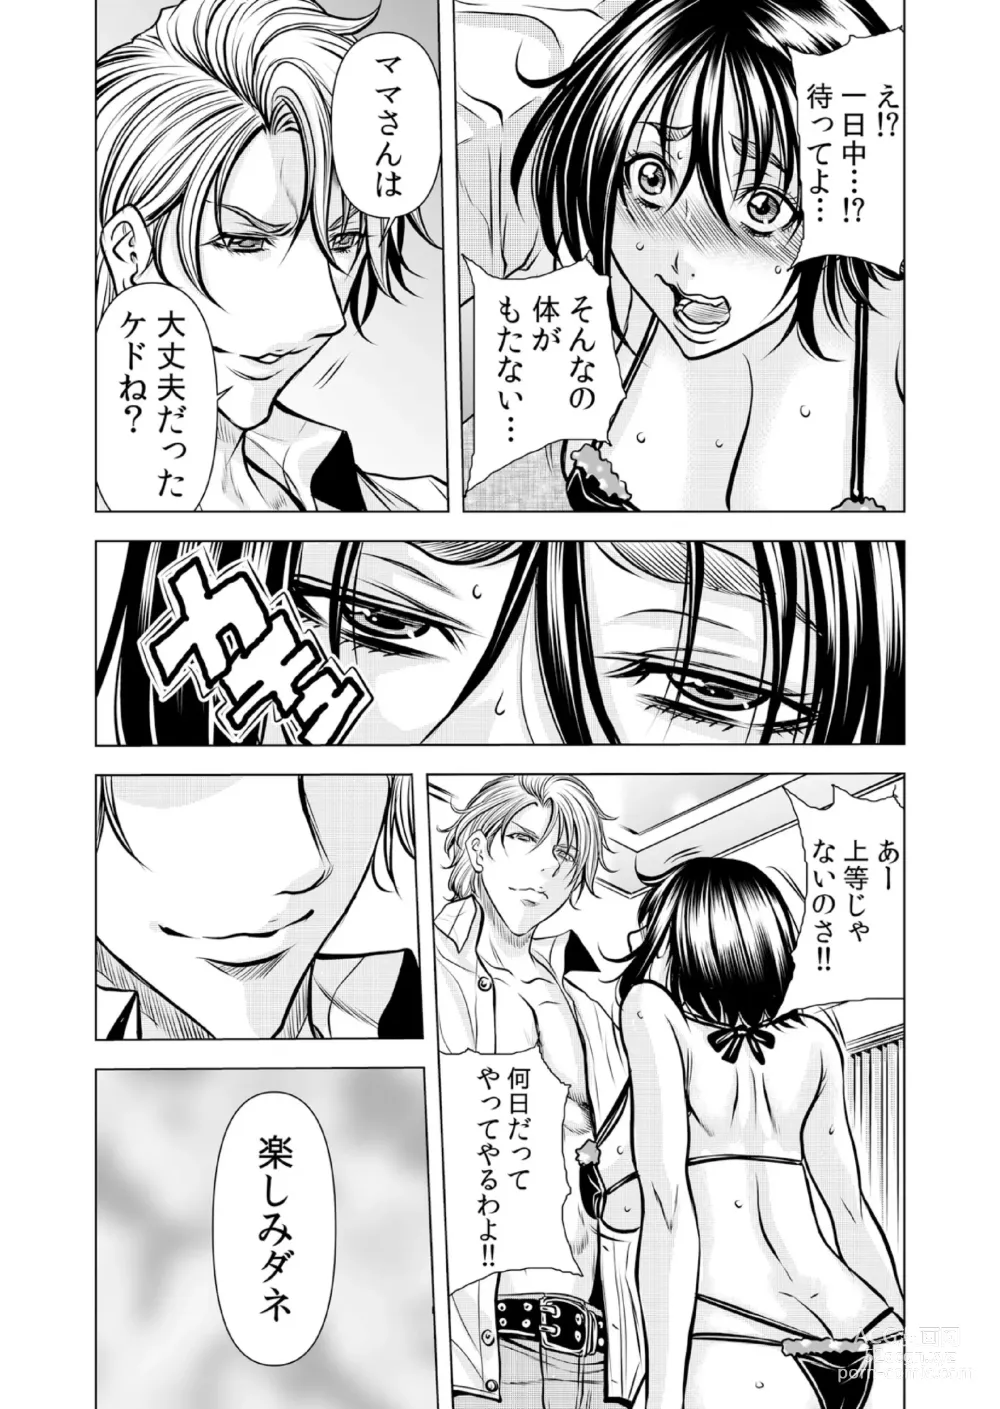 Page 5 of manga Mamasan,yobai ha OK desuka? VOL11